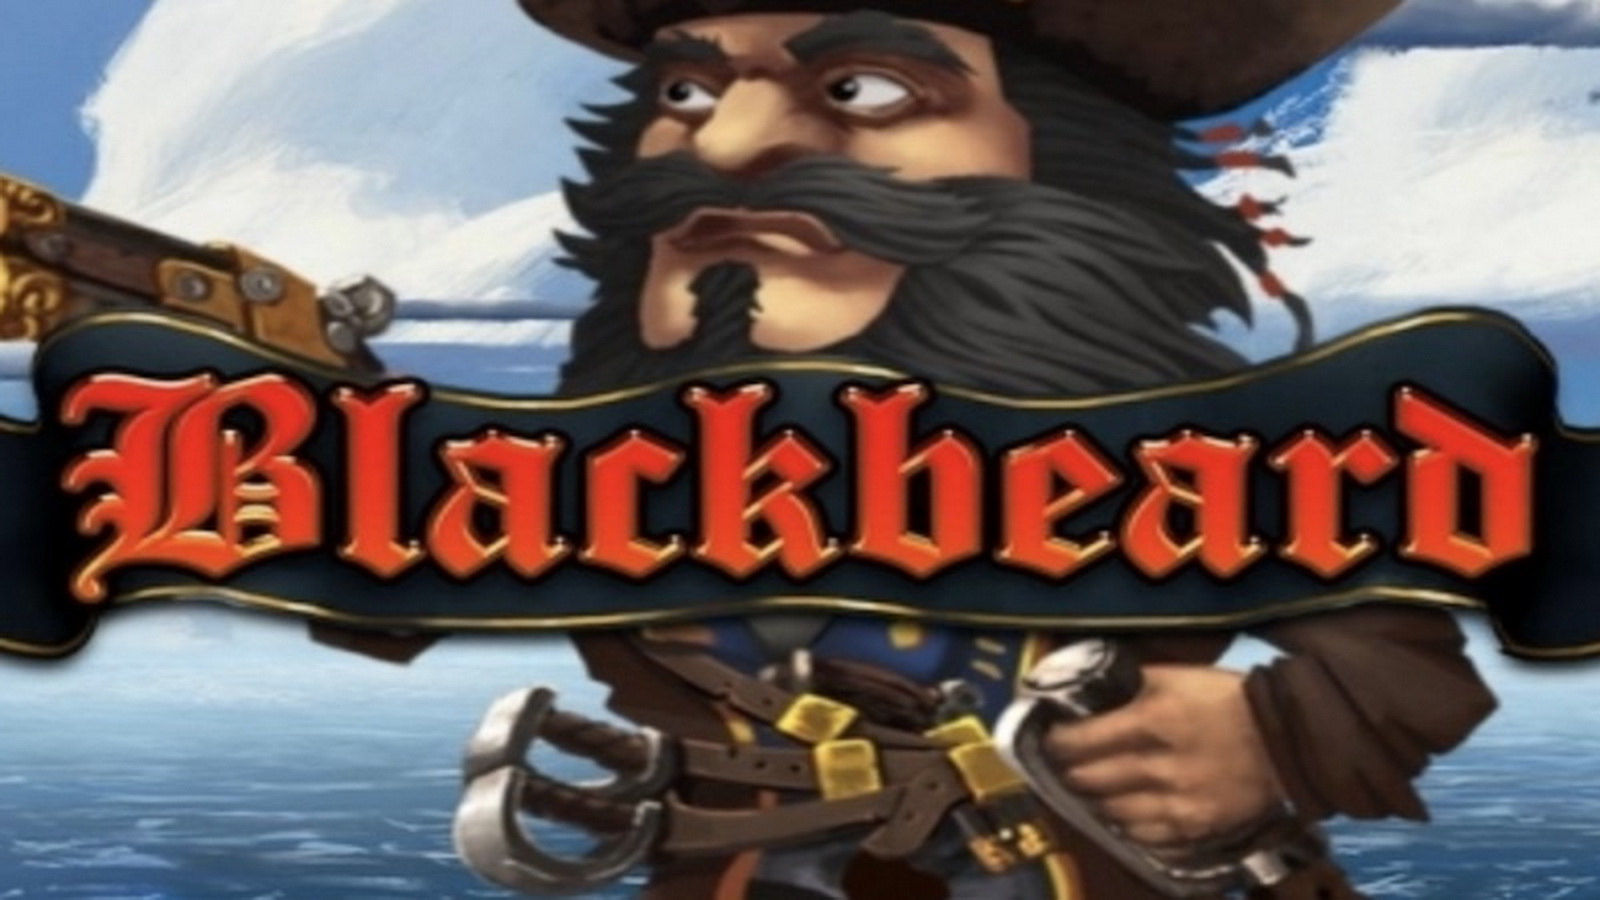 Blackbeard demo